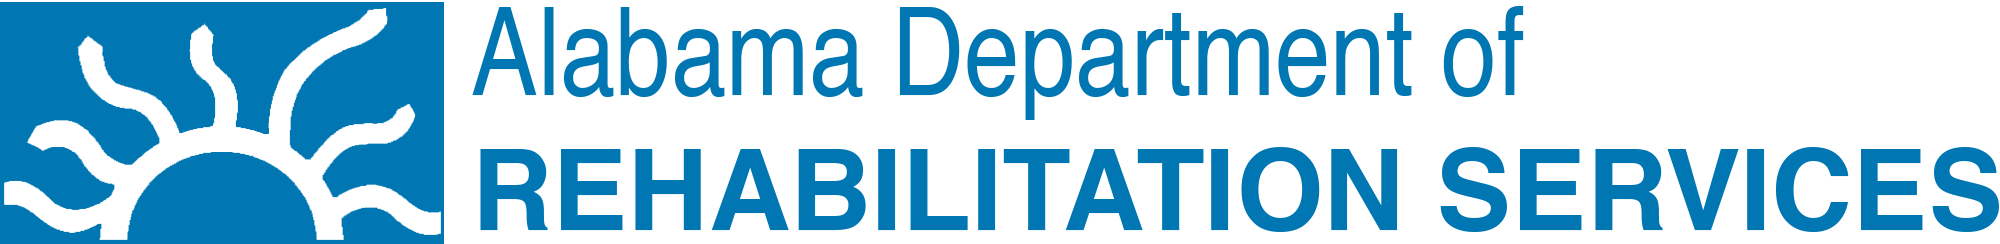 Alabama Department of Rehabilitation Services logo